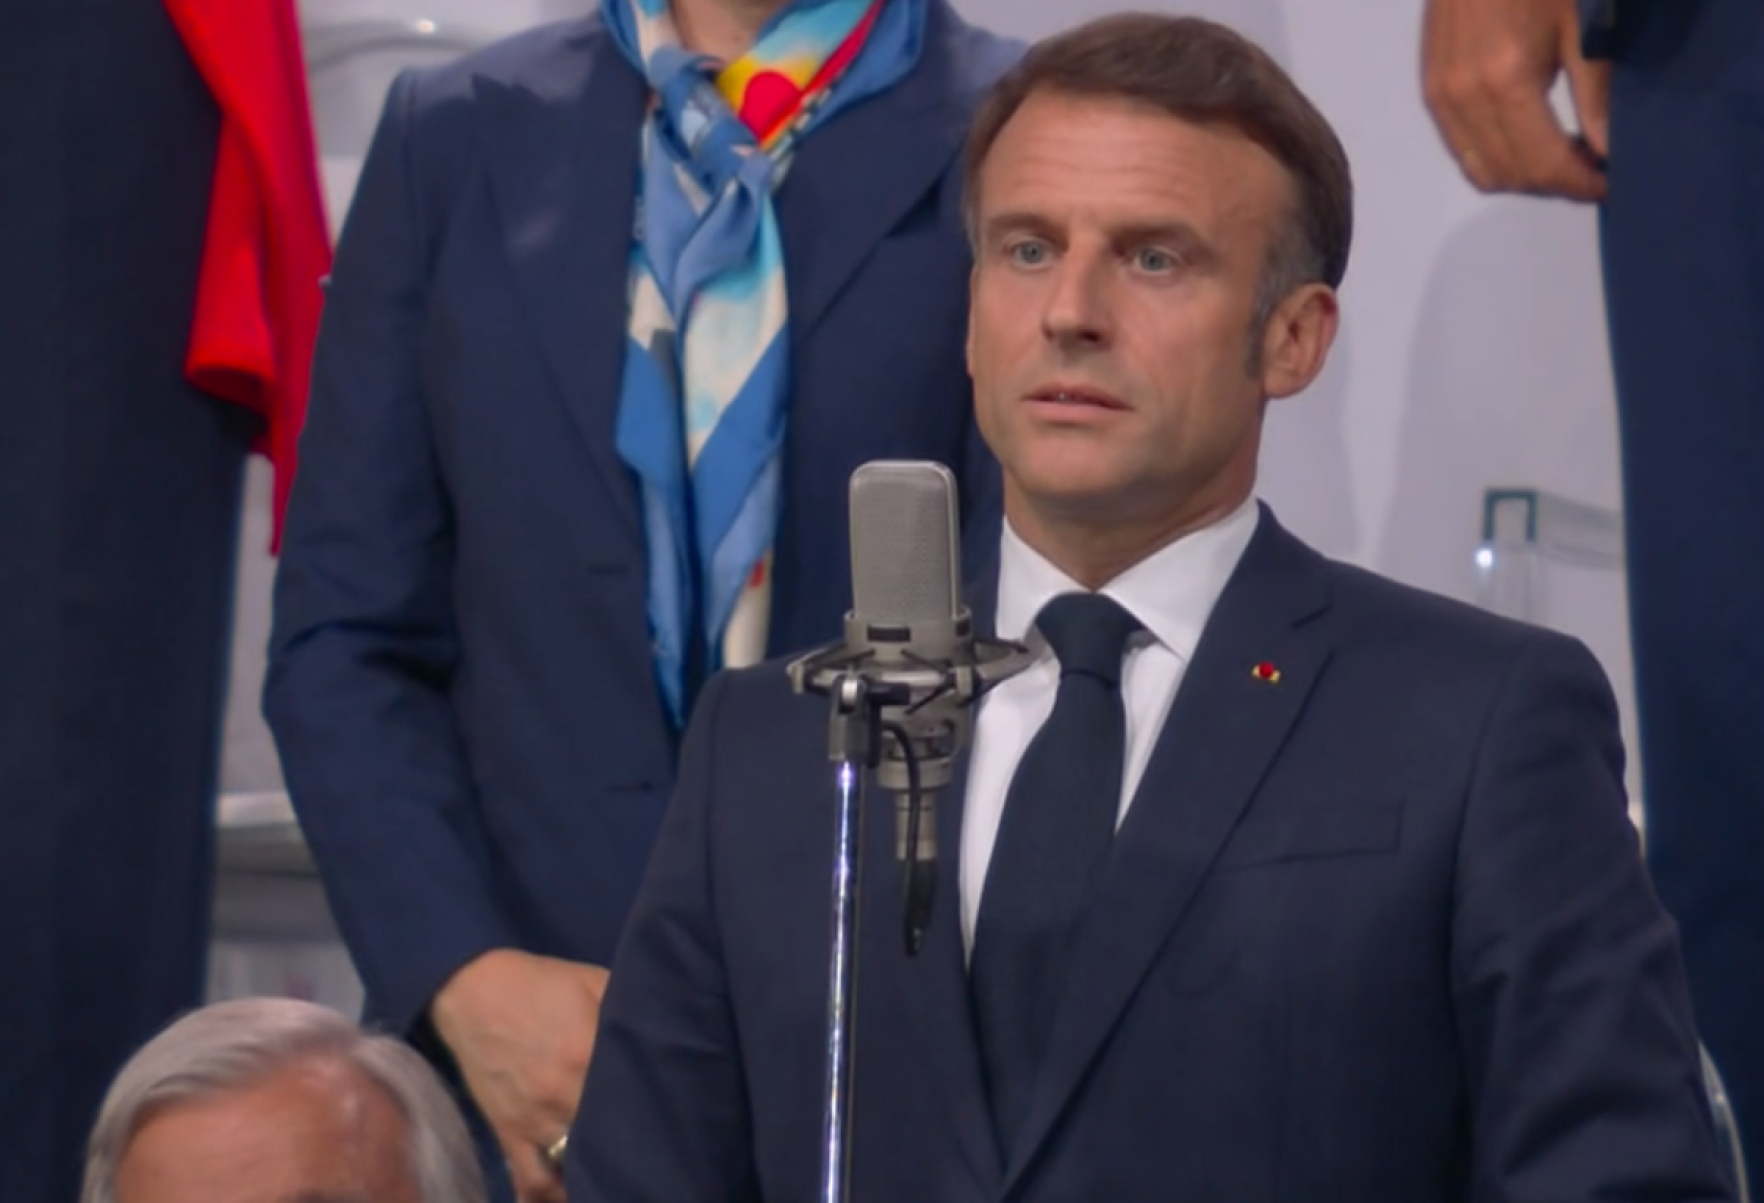 Olimpíadas de Paris: Macron fala de 